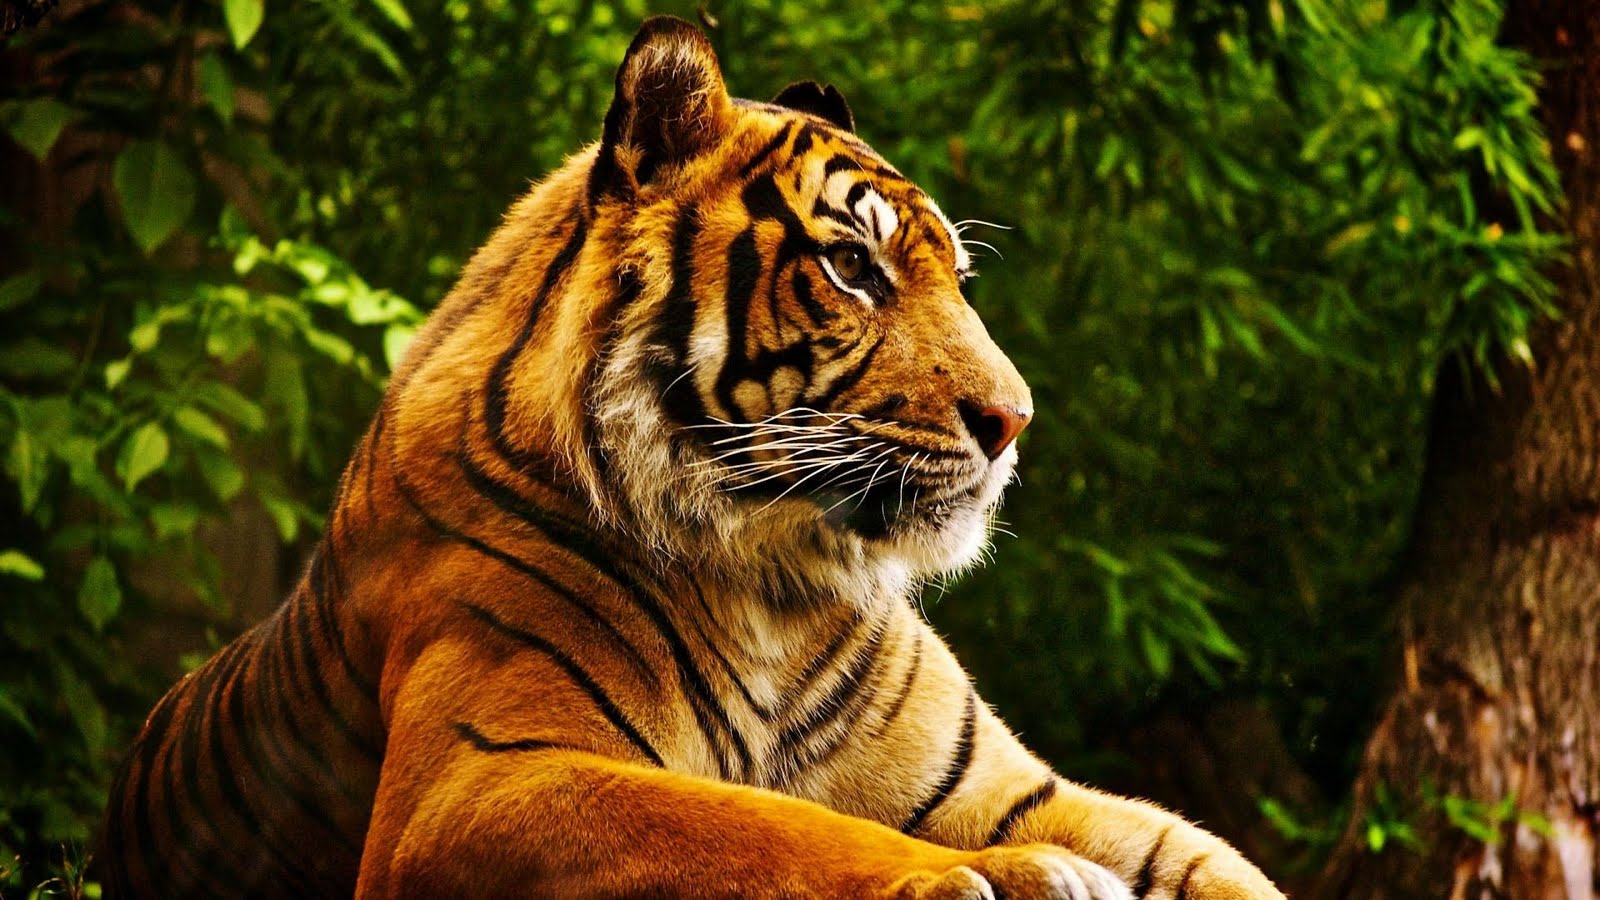 Tiger HD Wallpaper. Tiger Pics. Tiger Image. Beautiful Cool